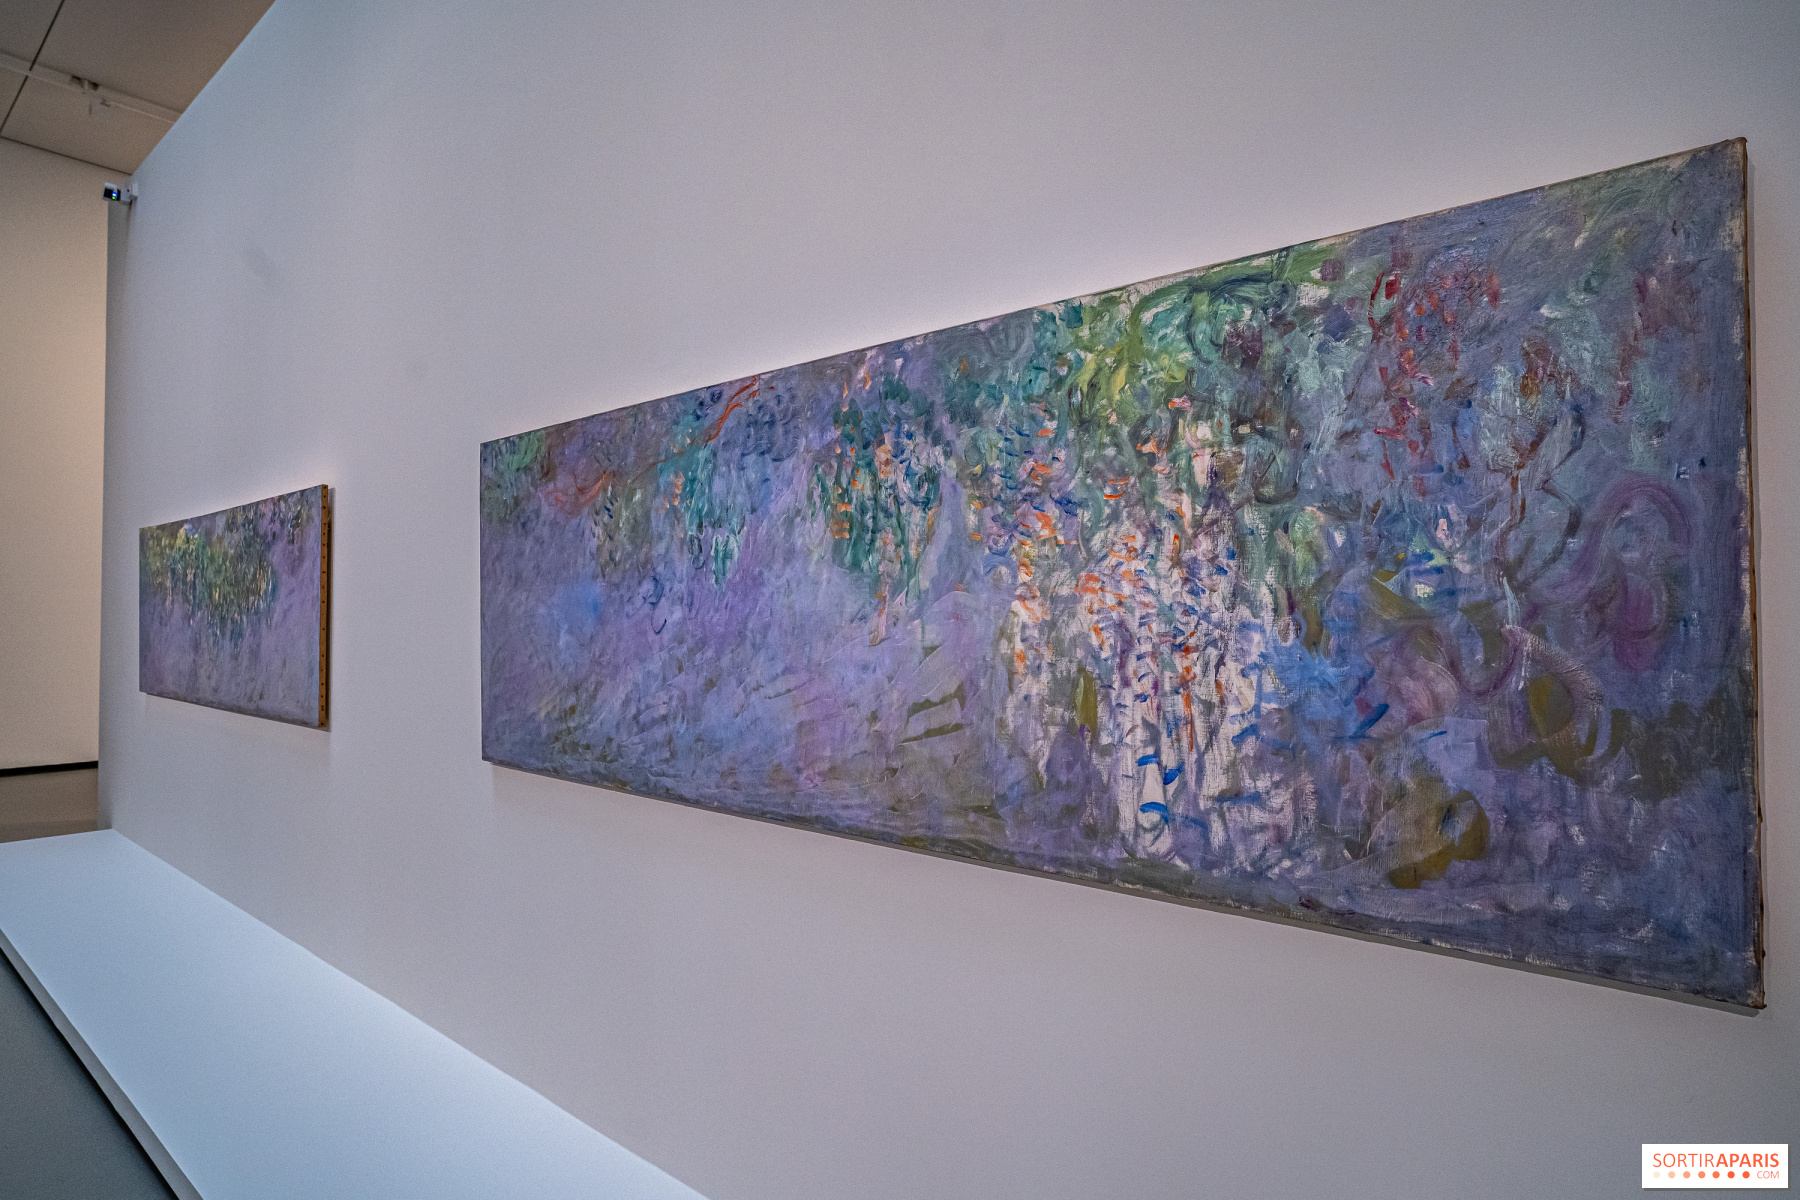 Monet - Mitchell exhibition, Fondation Louis Vuitton, until February 2023